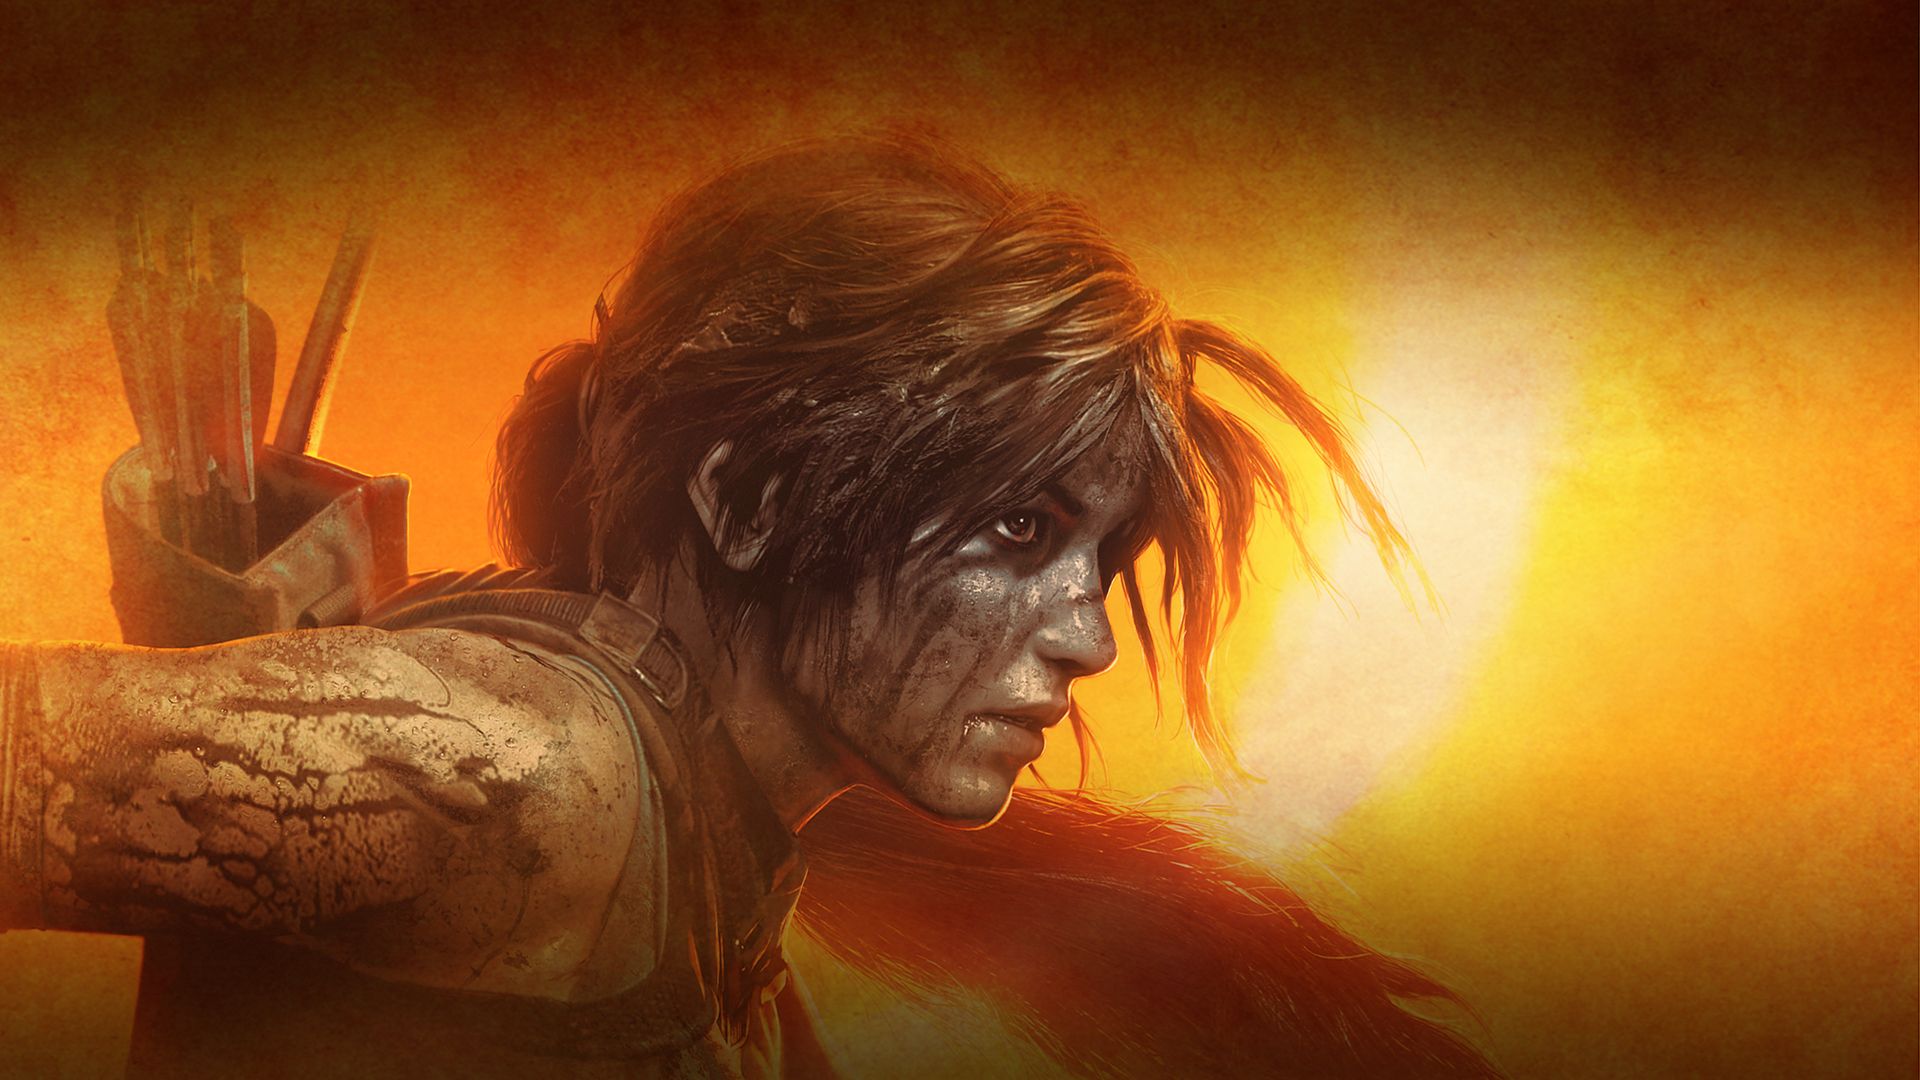 Lara Croft in Shadow of the Tomb Raider Wallpaper. HD Wallpaper